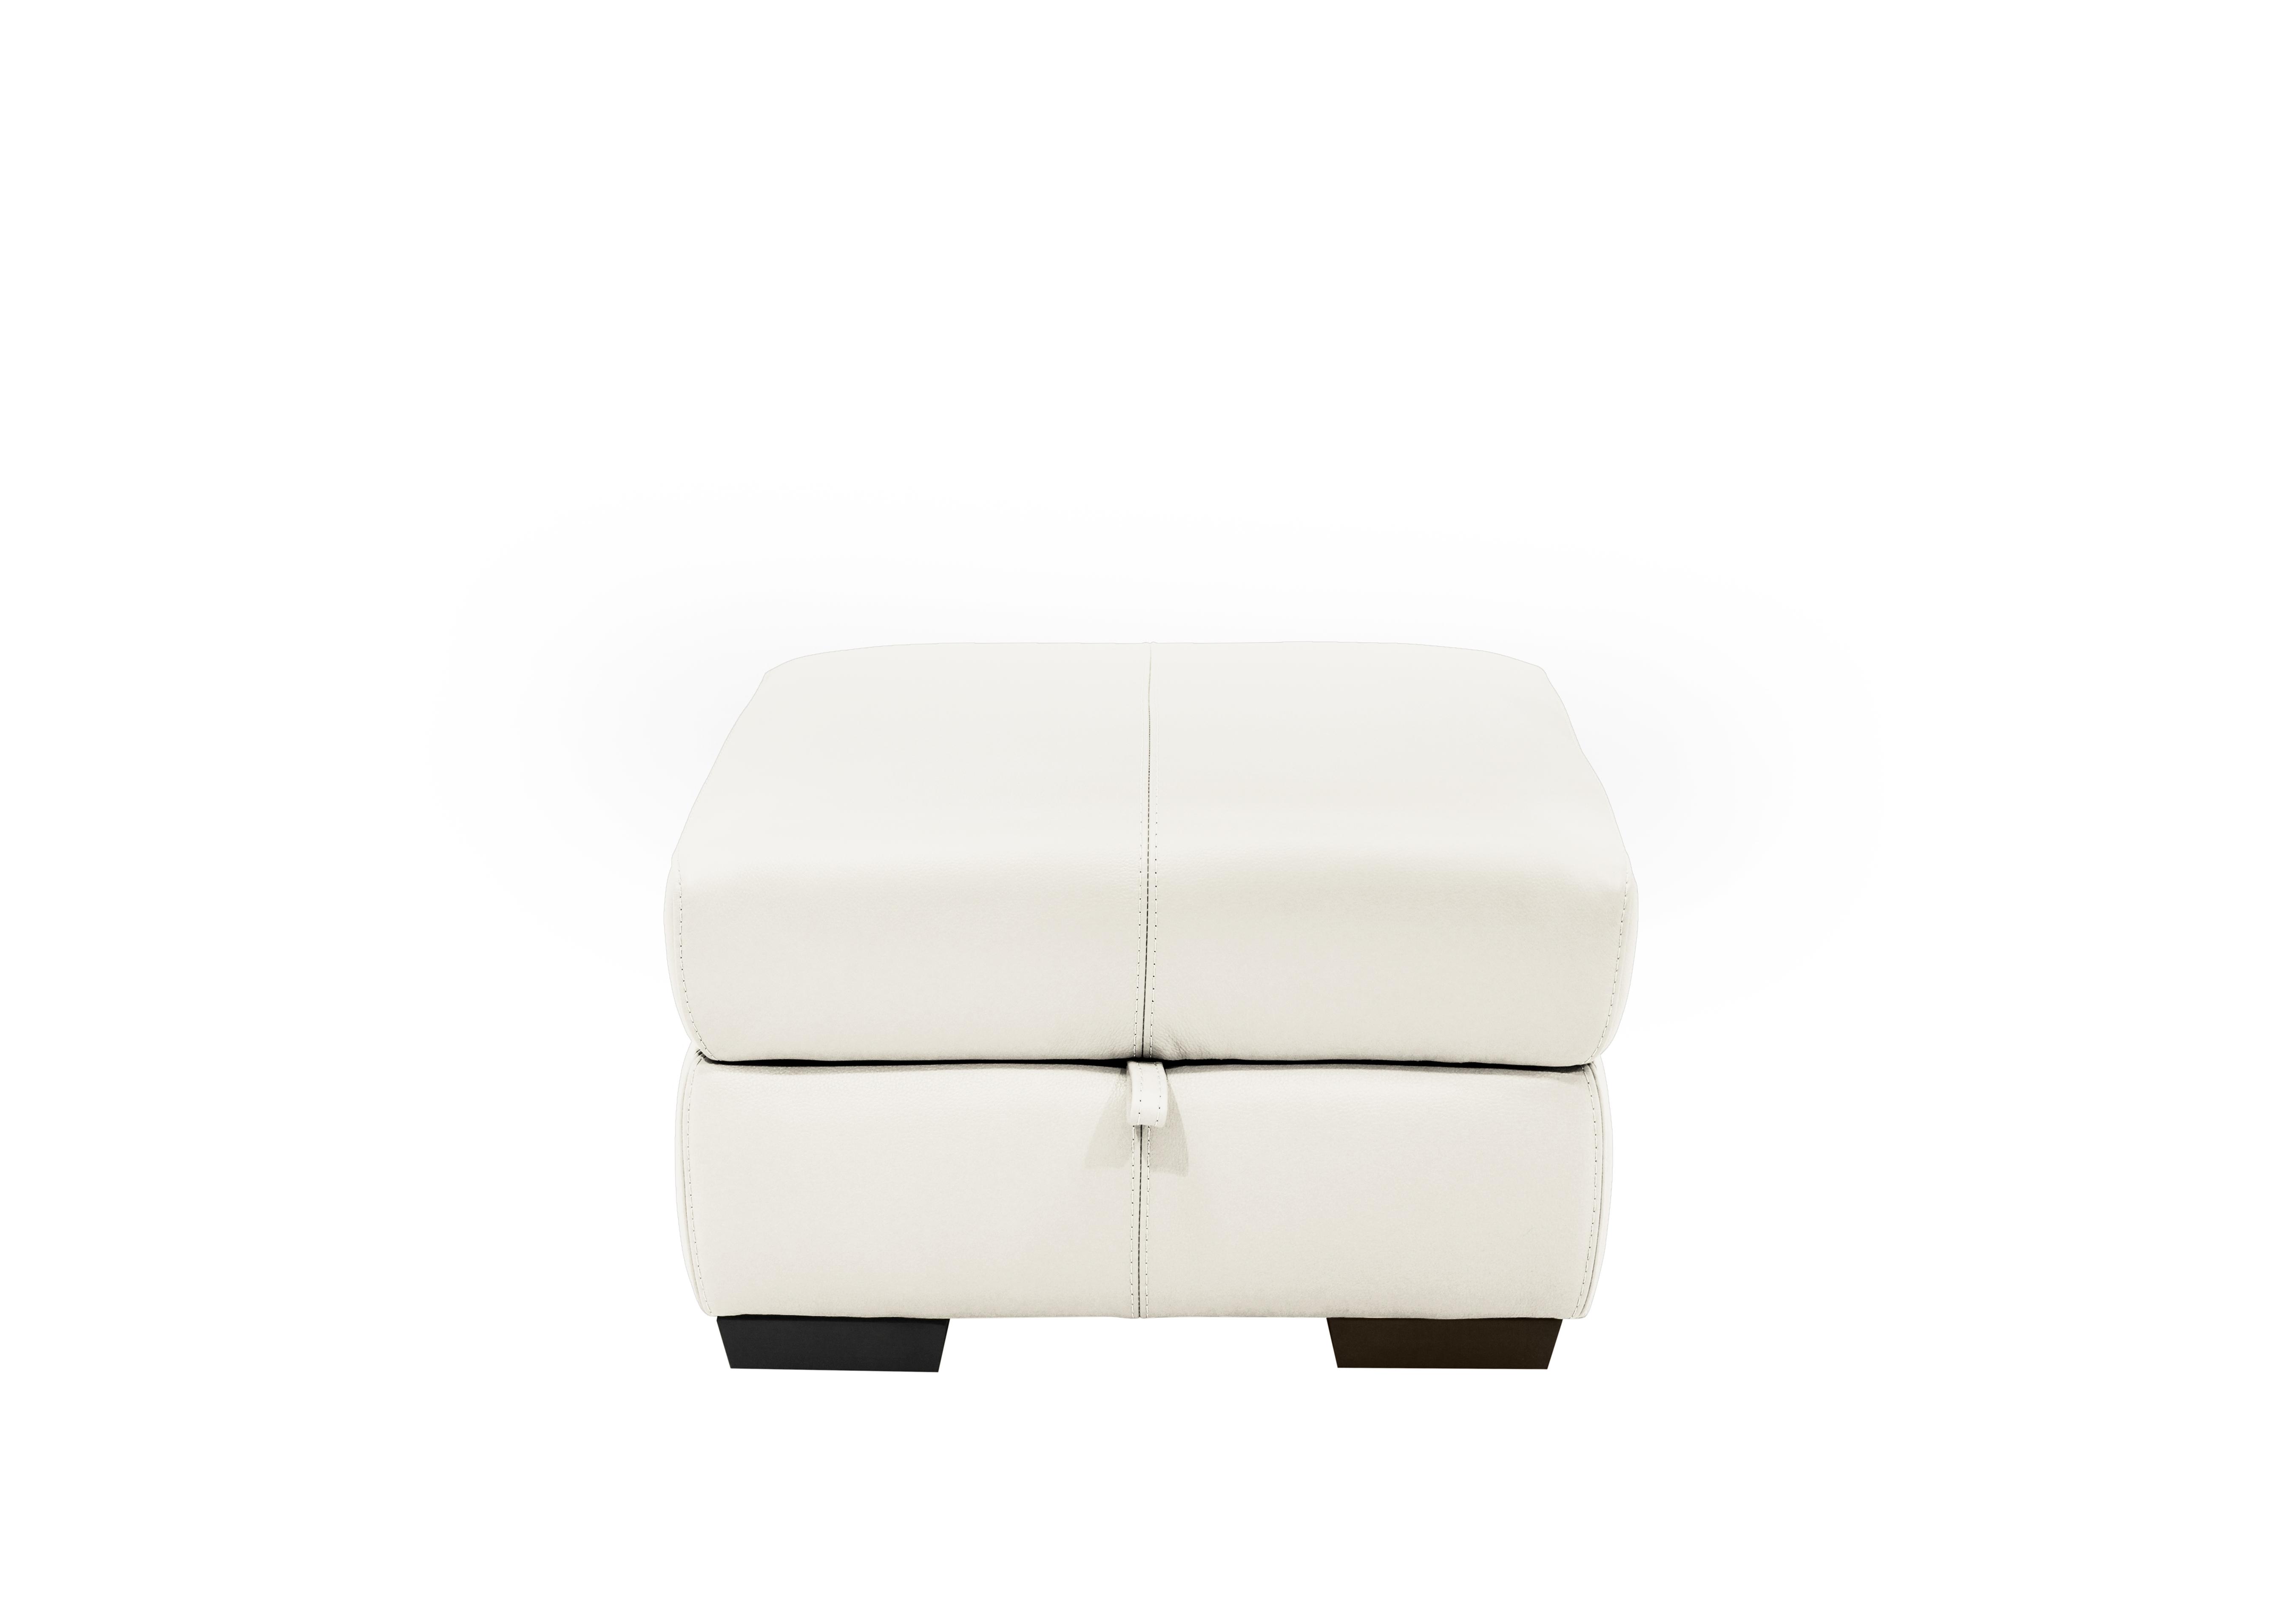 Elixir Leather Storage Footstool in Bv-744d Star White on Furniture Village